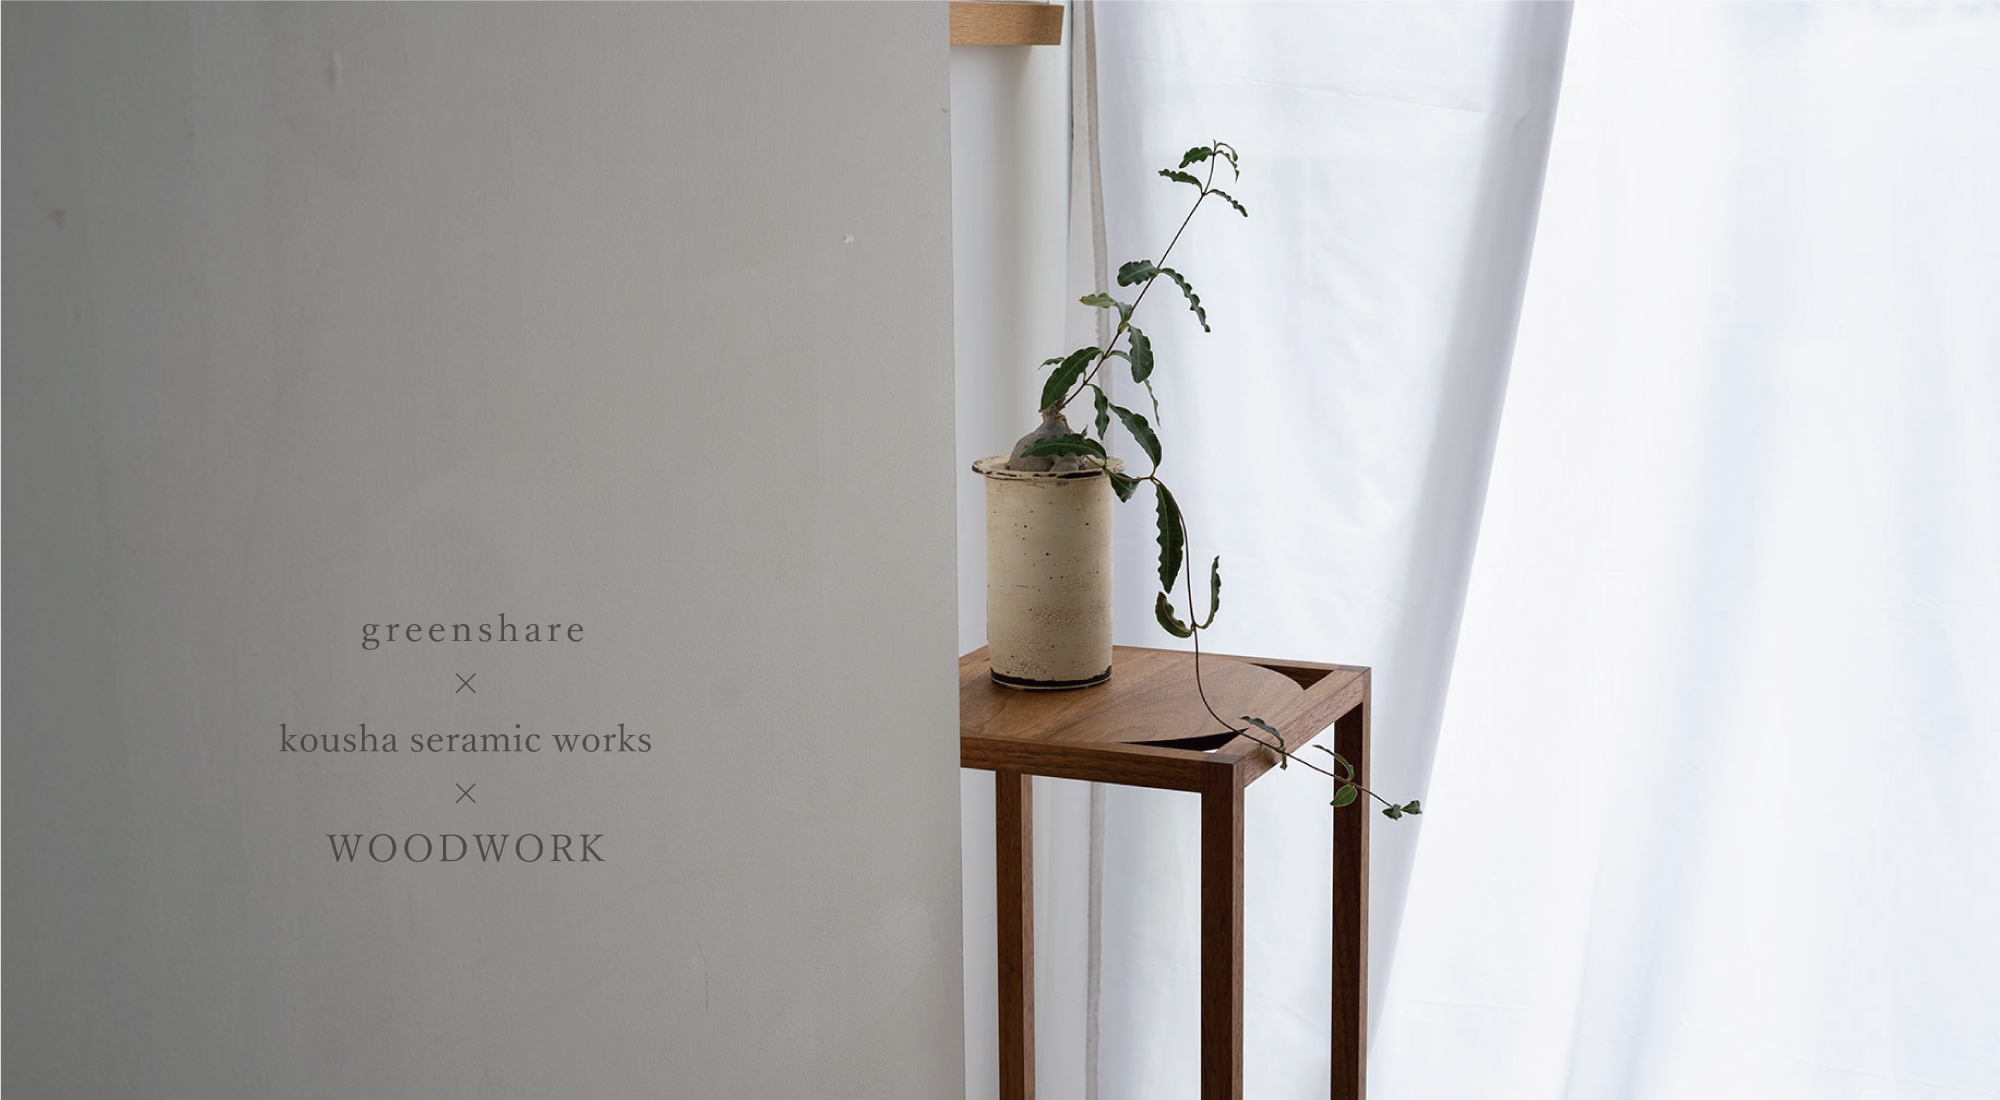 greenshare × kousha seramic works × WOODWORK